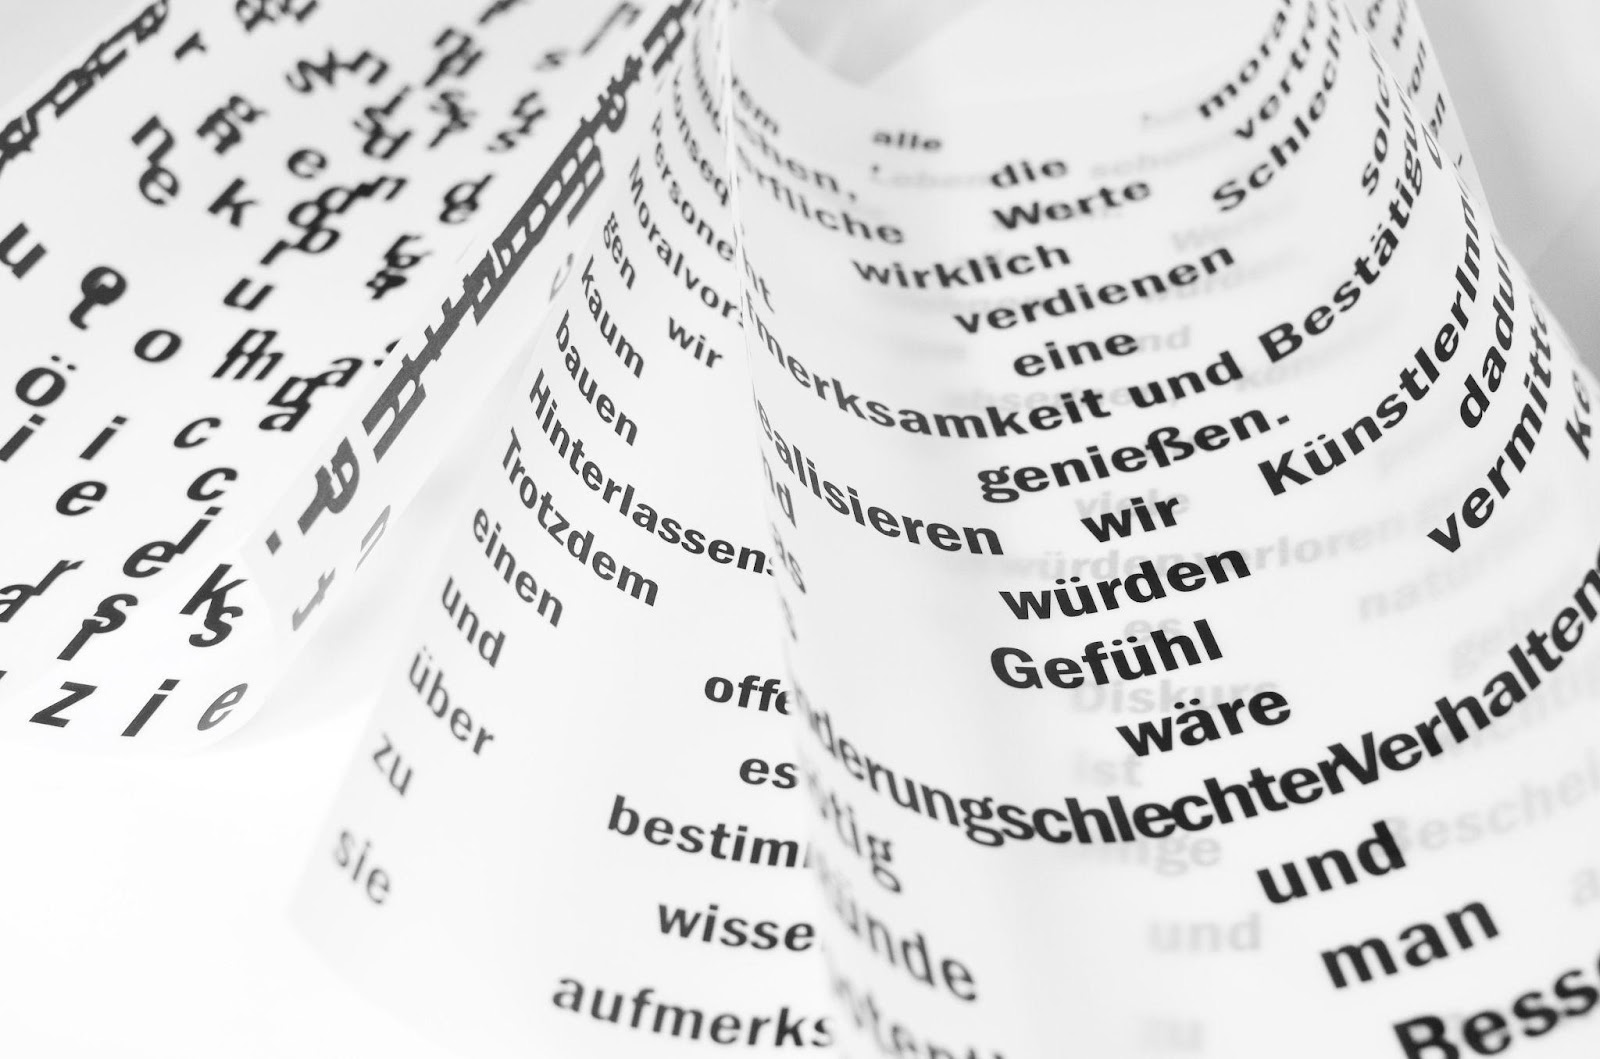 Курсы немецкого языка в онлайн школе Capital Letter